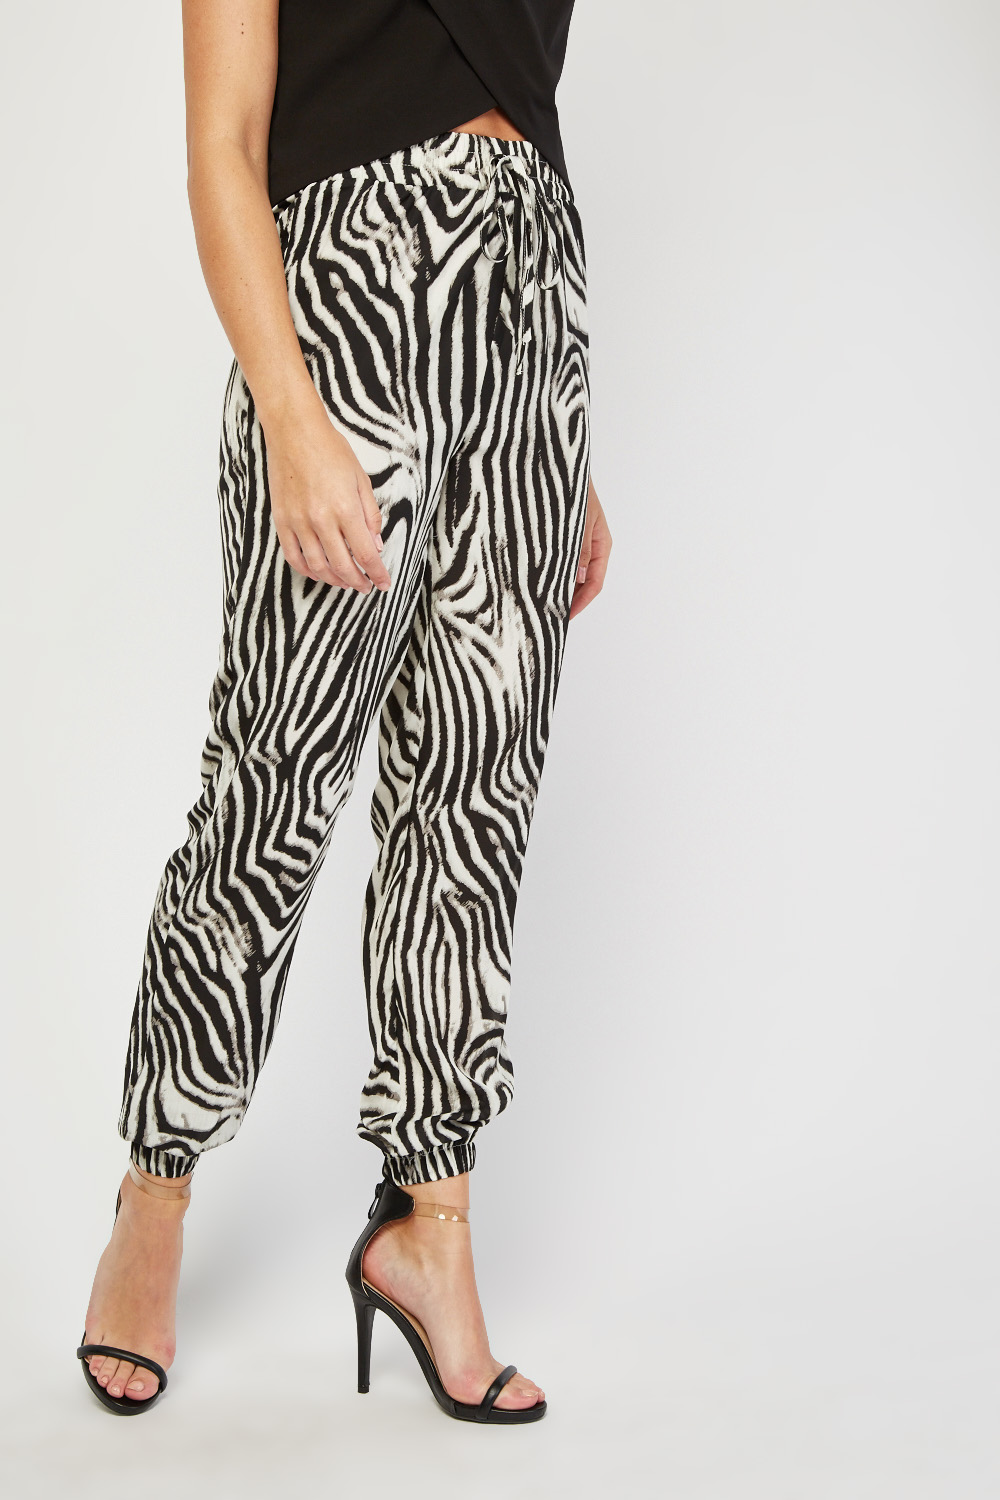 Zebra Print Sheer Jogger Style Pants - Just $7